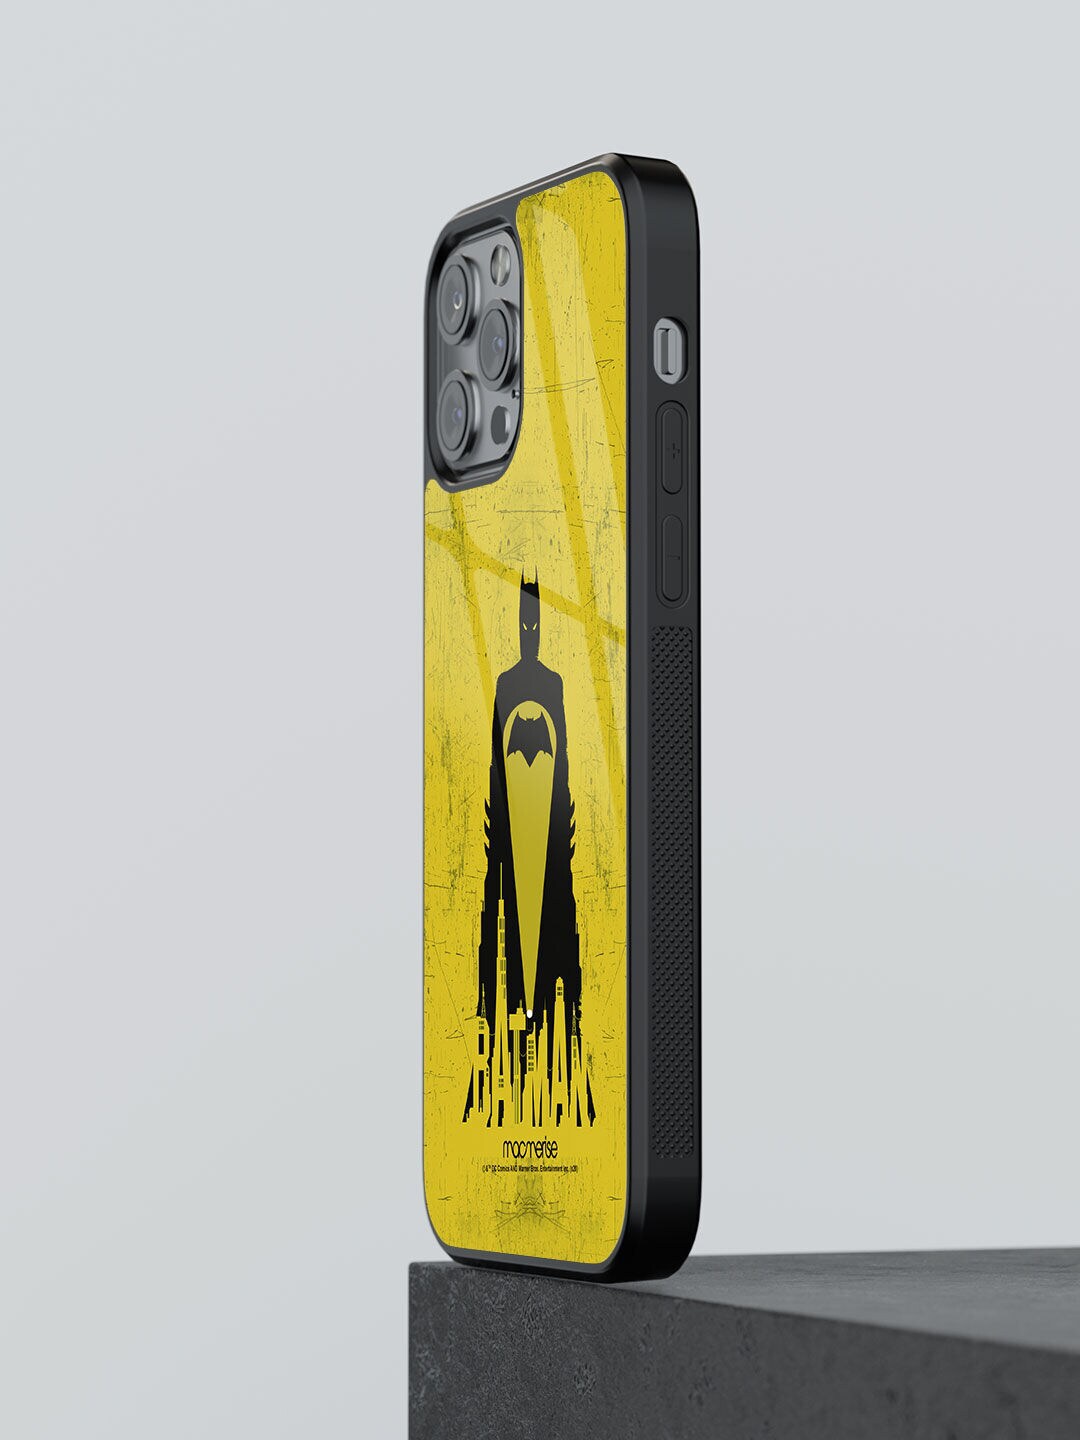 macmerise Yellow & Black Bat Signal iPhone 12 Pro Max Back Case Price in India